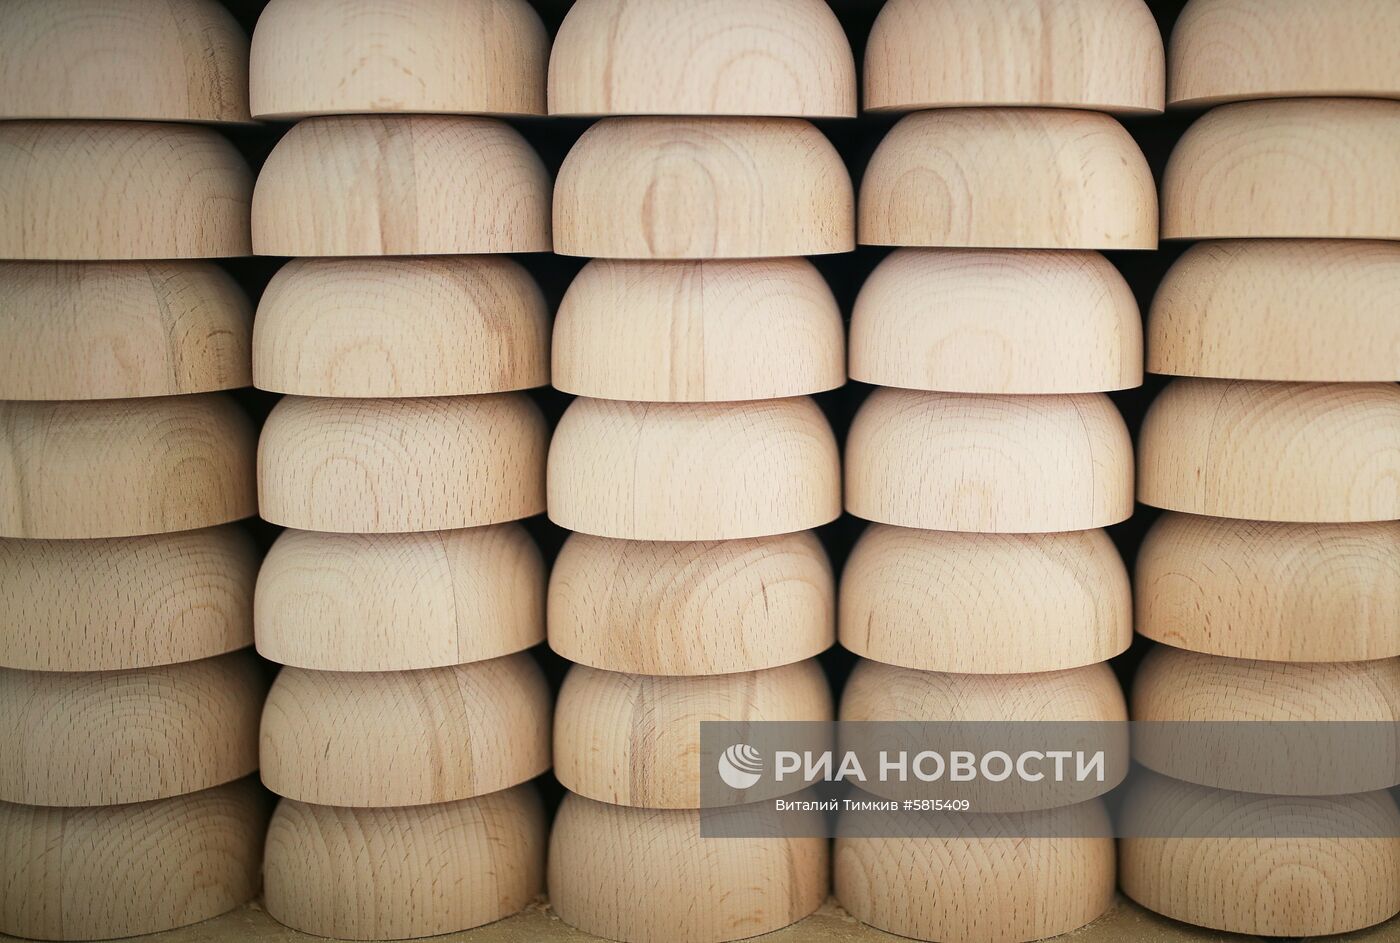 Производство мебели на фабрике "Мебель мастер" в Краснодаре